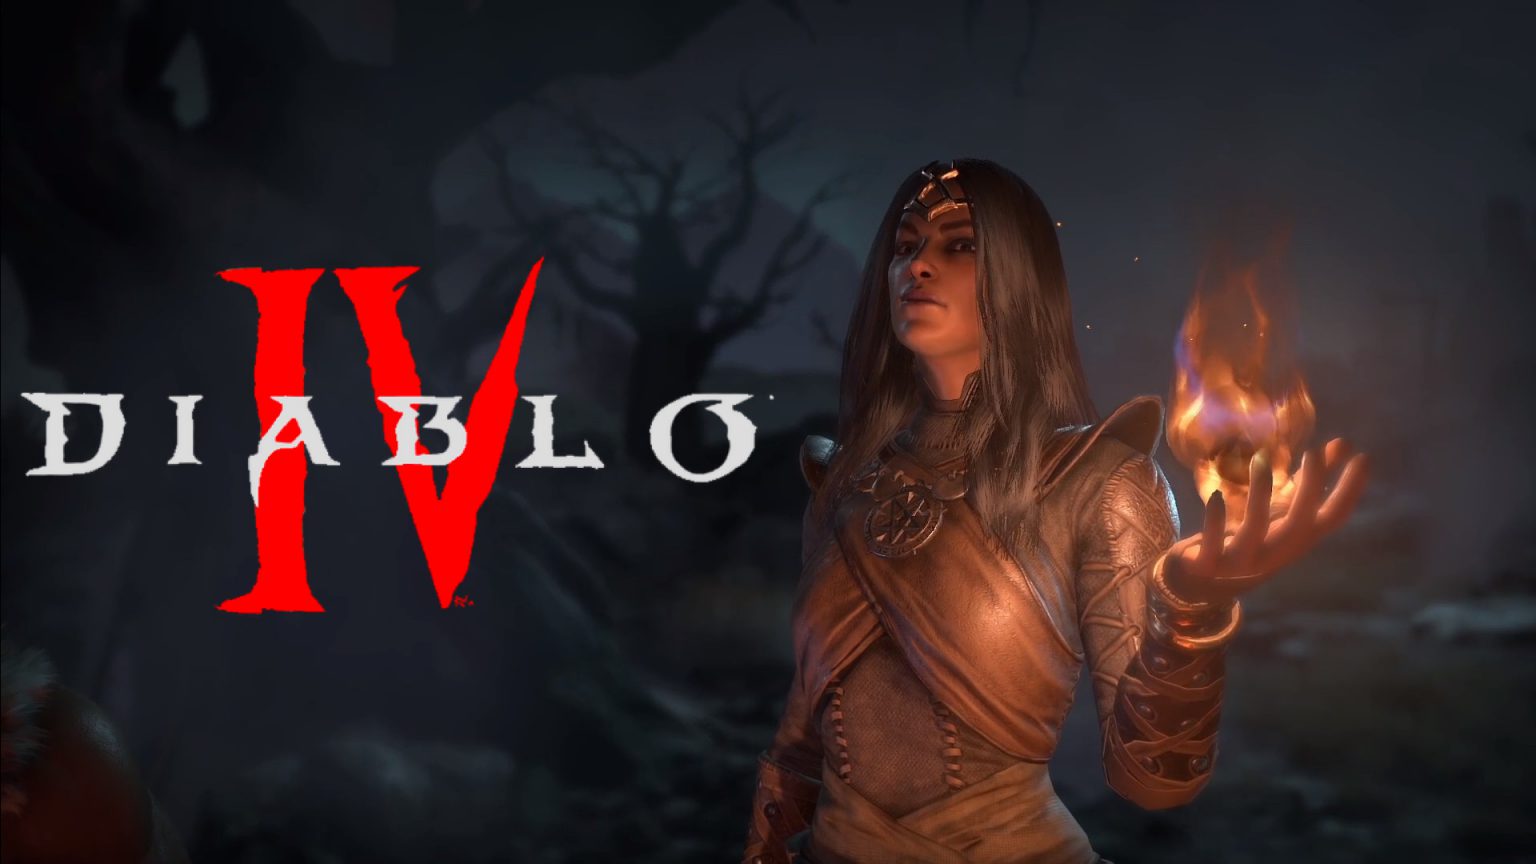 Diablo 4 spoiler alert! Release Date, trailer and rumors  EveDonusFilm